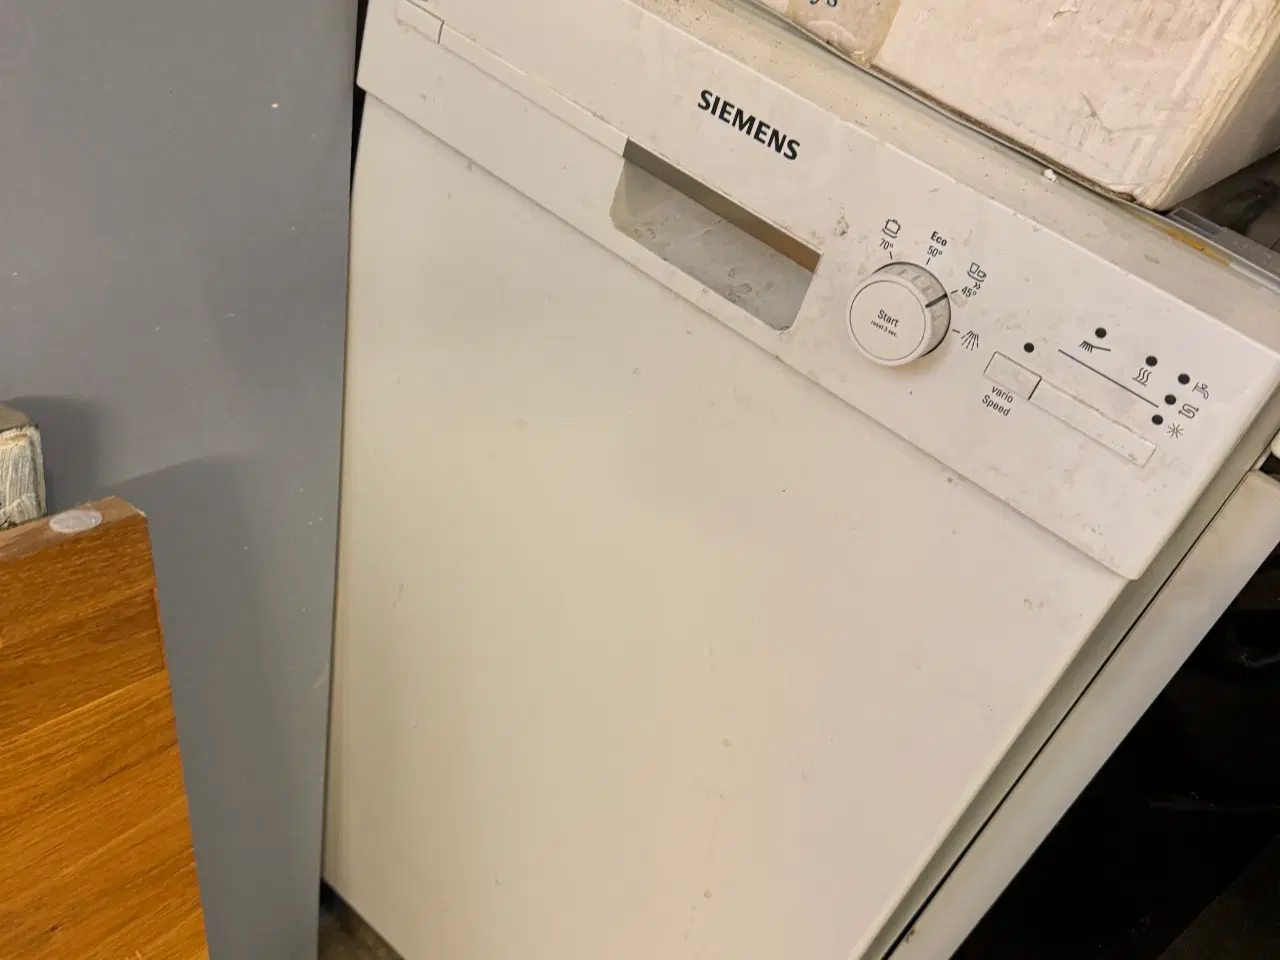 Billede 1 - Opvaskemaskine fra Siemens